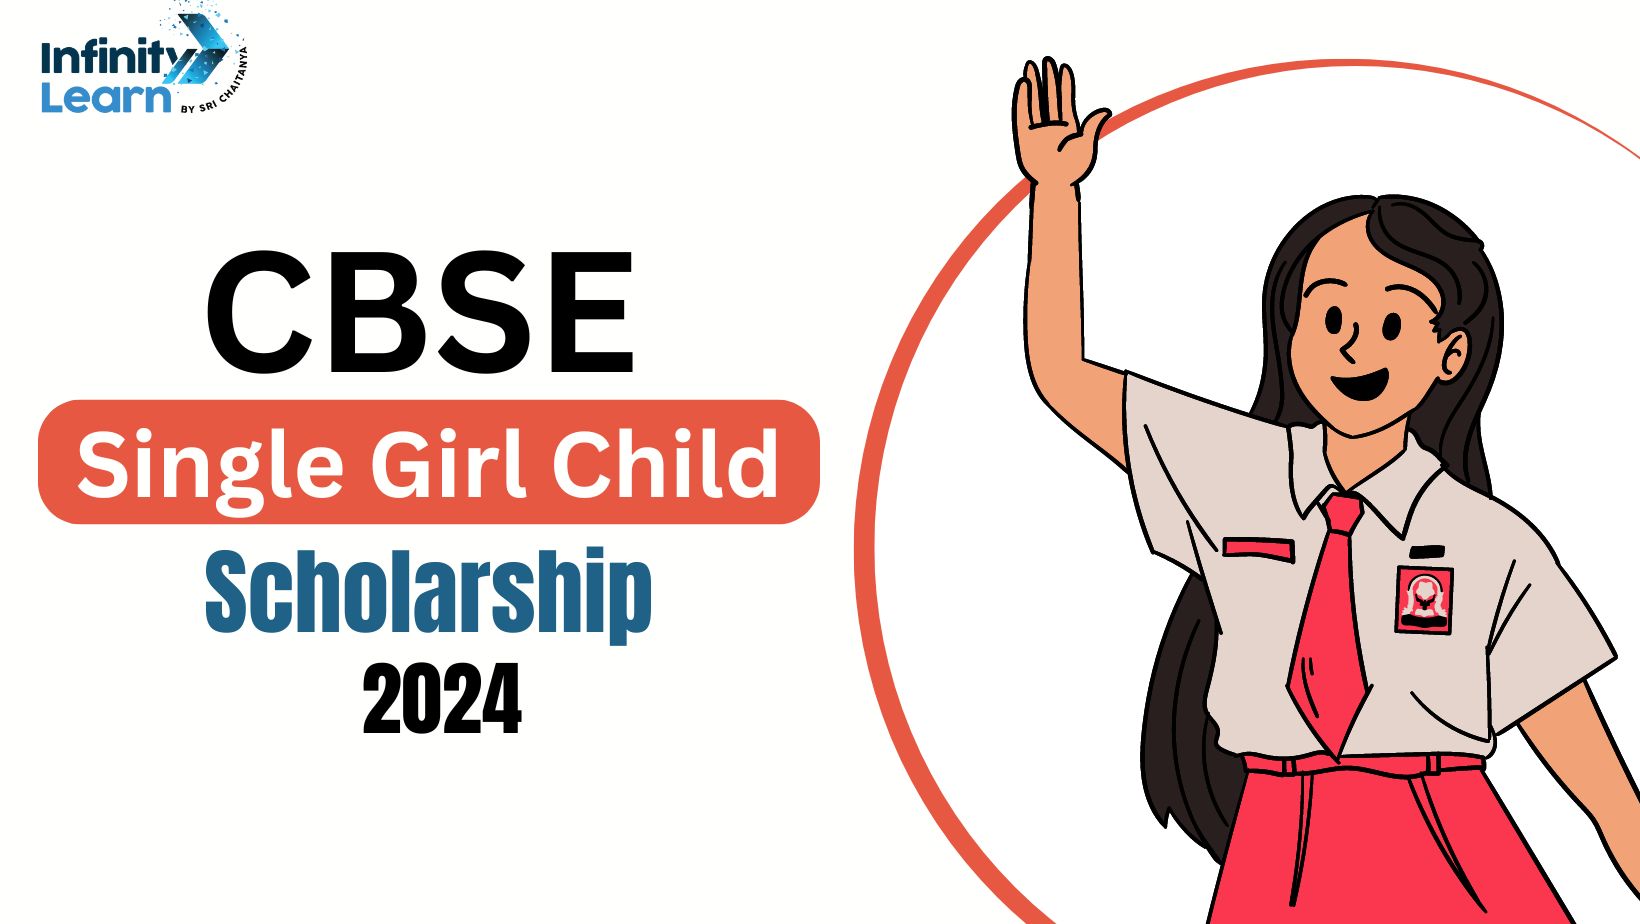 CBSE Single Girl Child Scholarship 2024